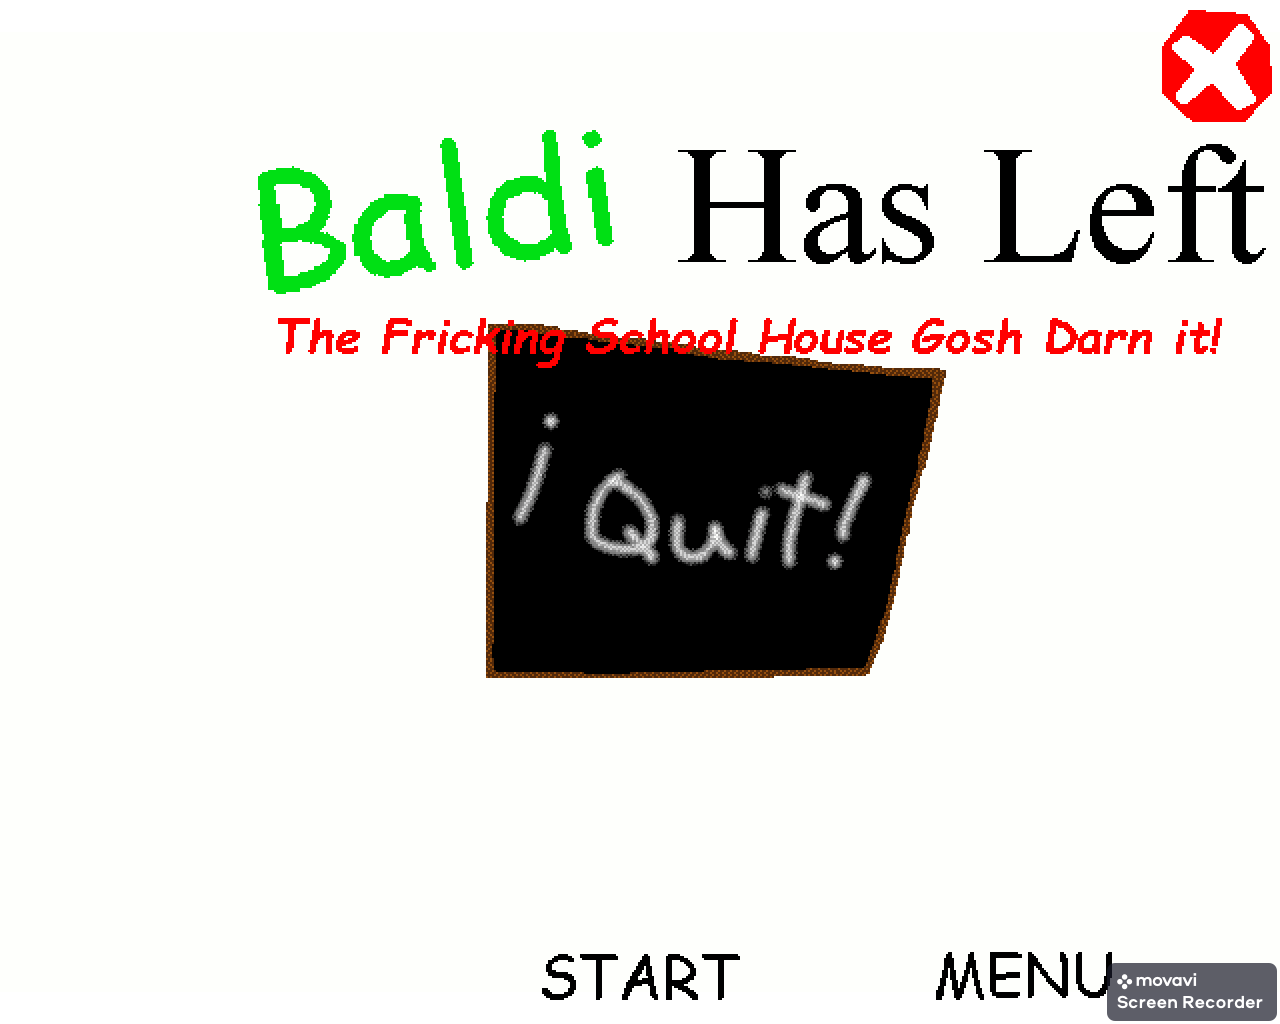 Minecraft BALDI'S BASICS IN EDUCATION MOD, BALDI, 1ST PRIZE, PRINCIPAL!